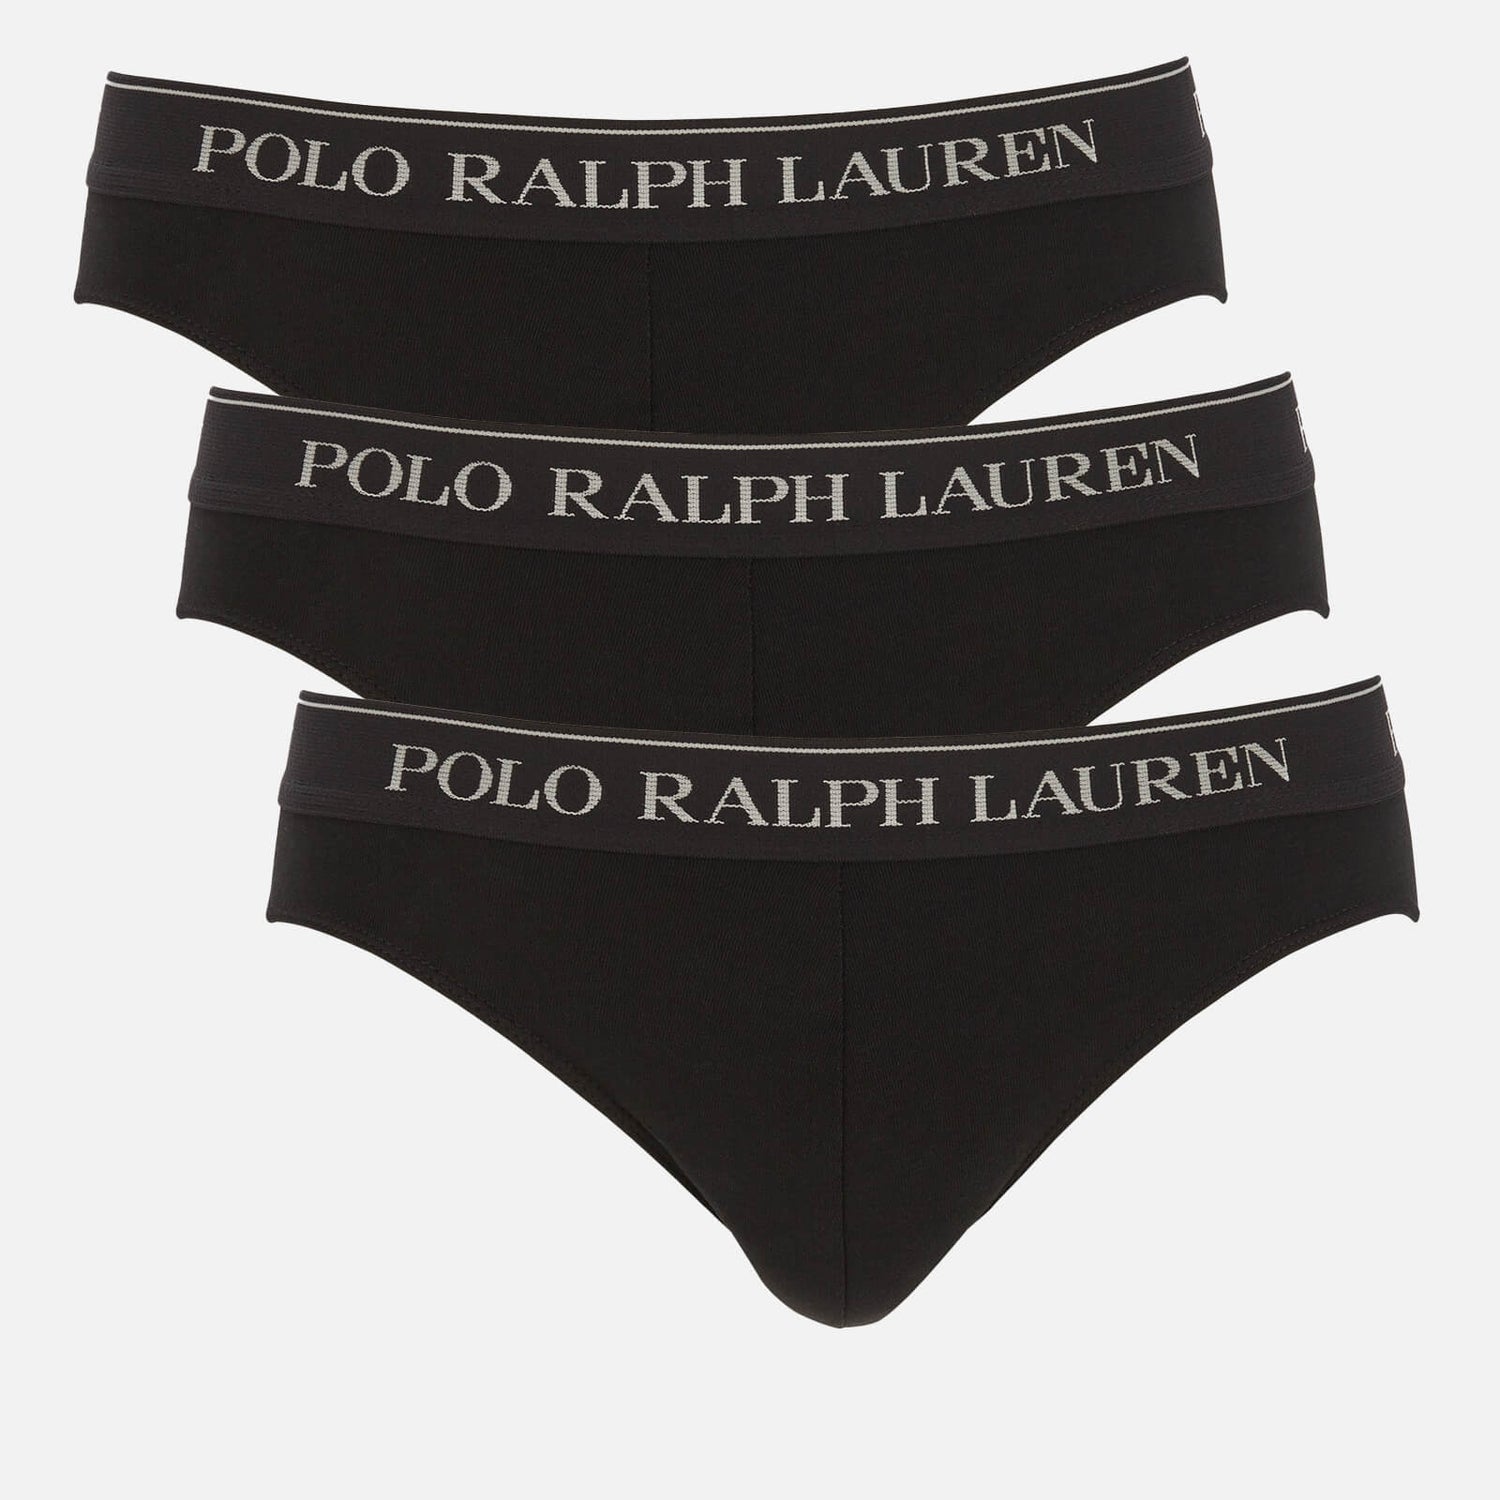 Polo Ralph Lauren Men's 3 Pack Briefs - Black/Multi Waistband - S